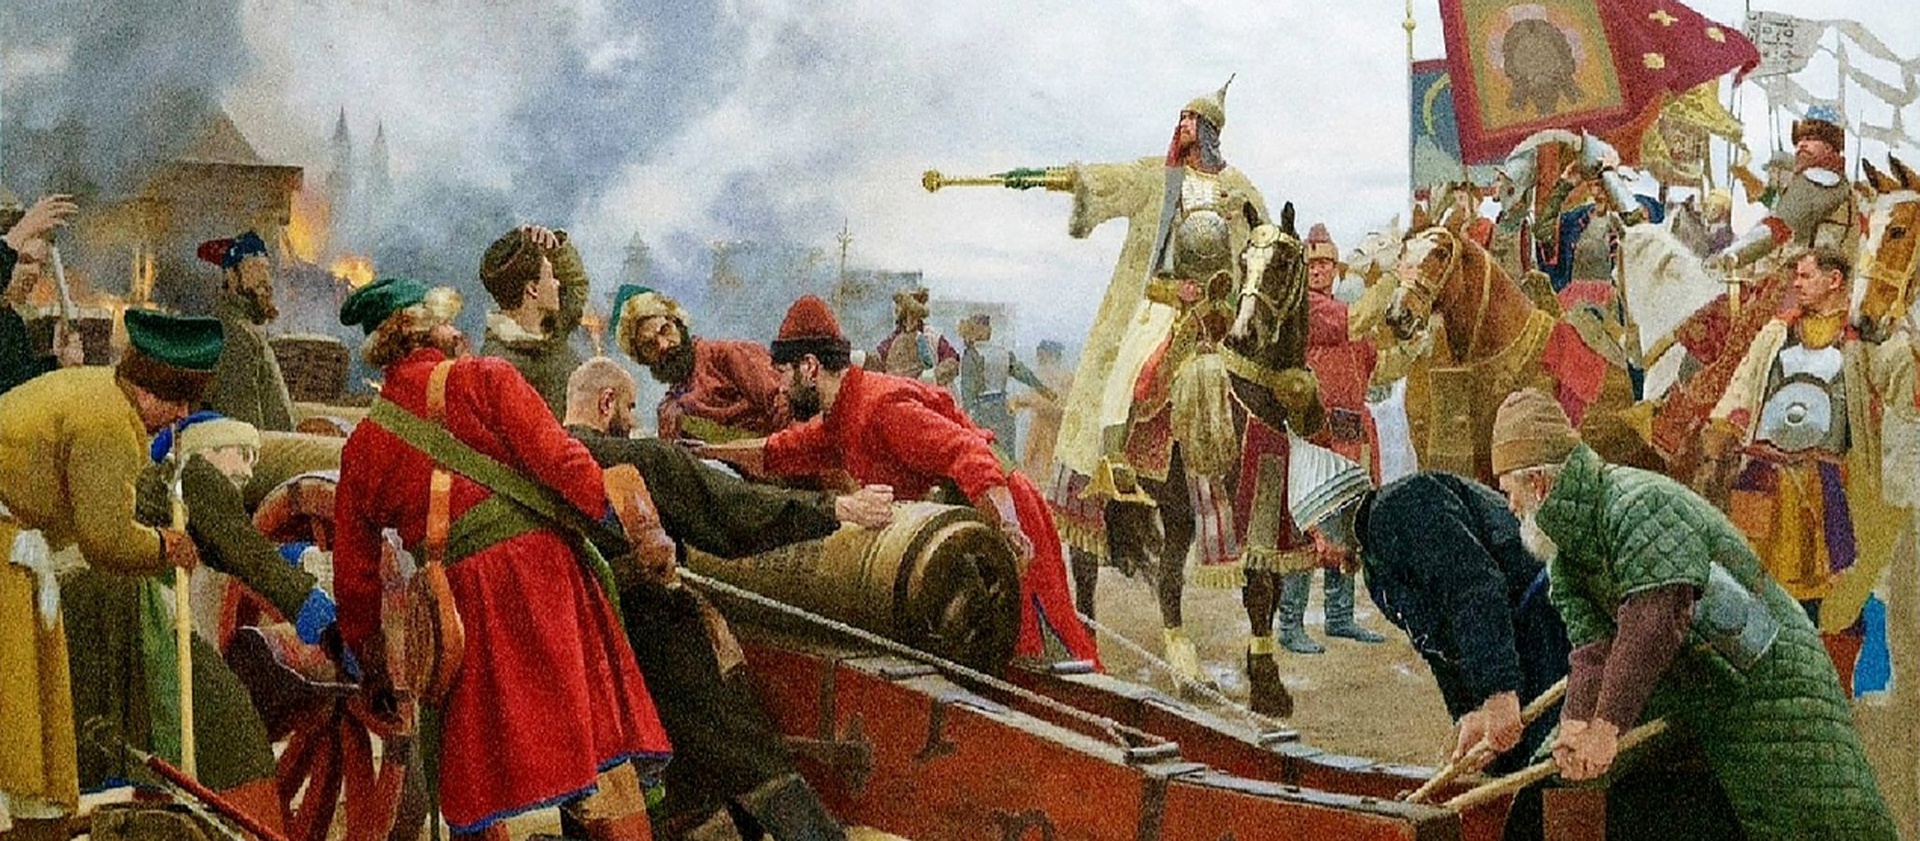 Полоцк, 1563. Мощь «бога войны»